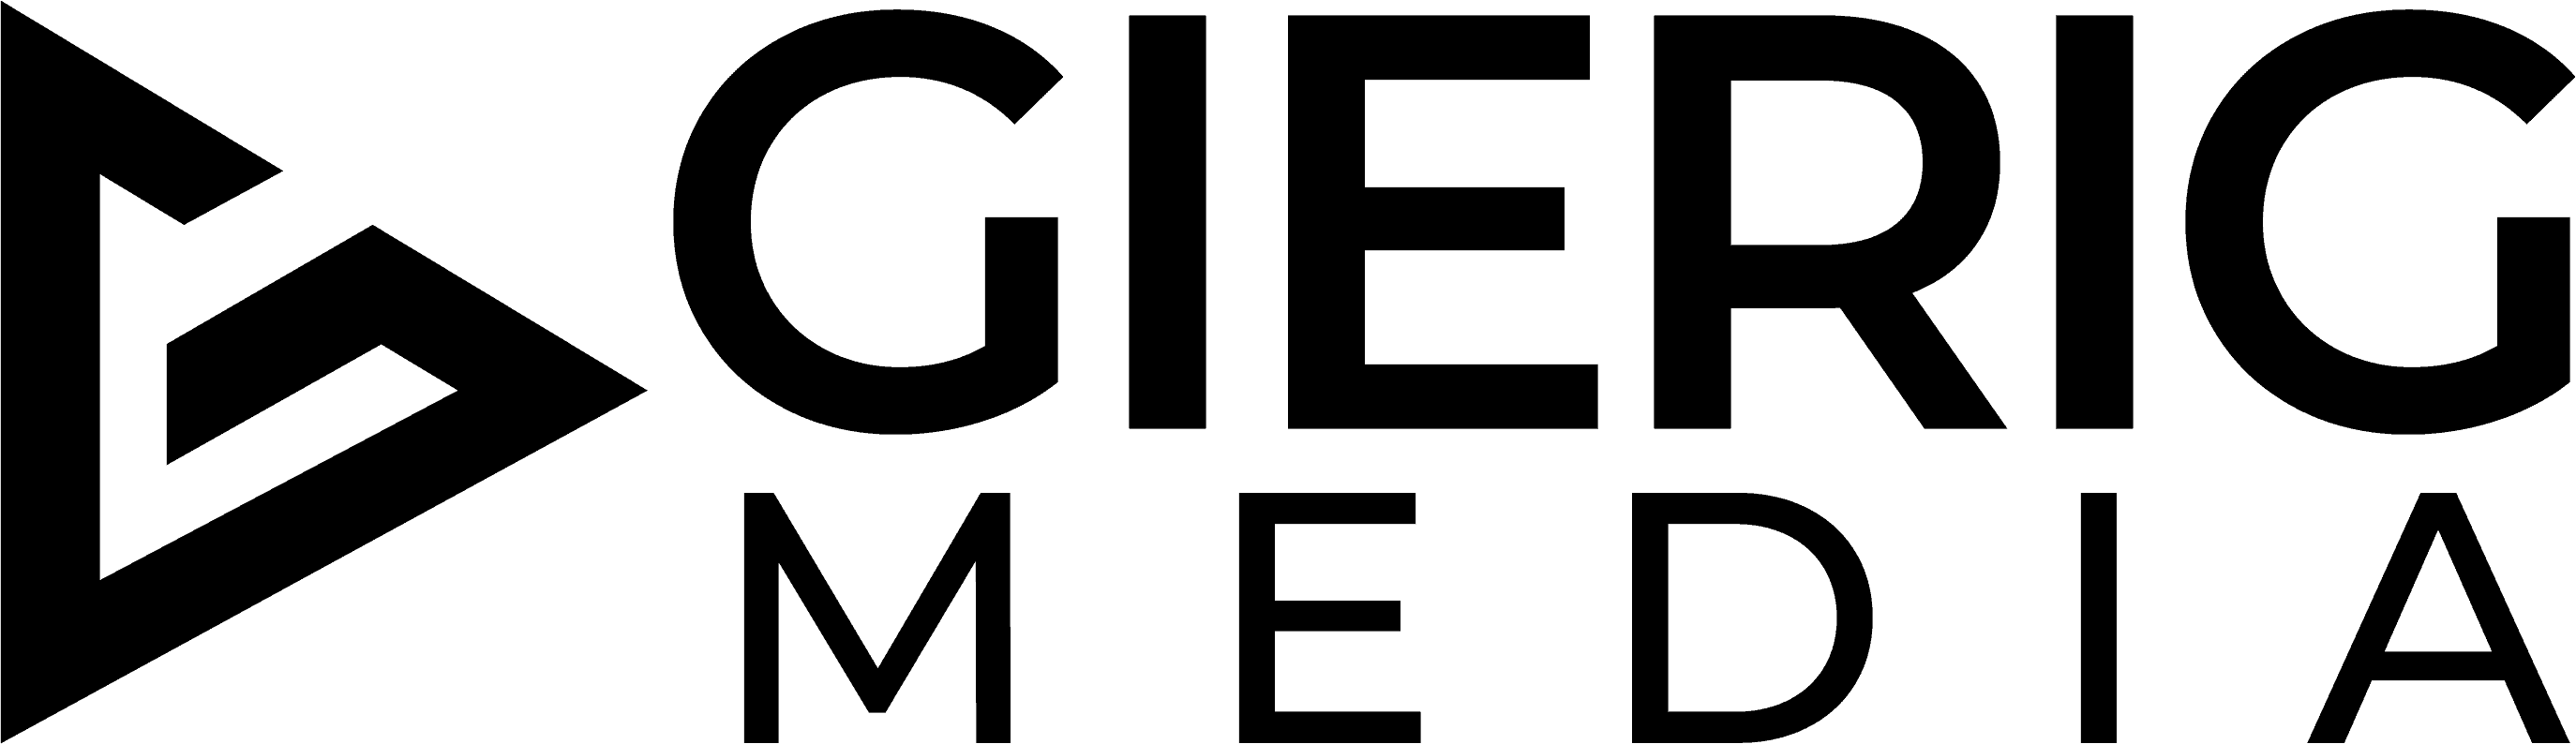 gierig media logo dark